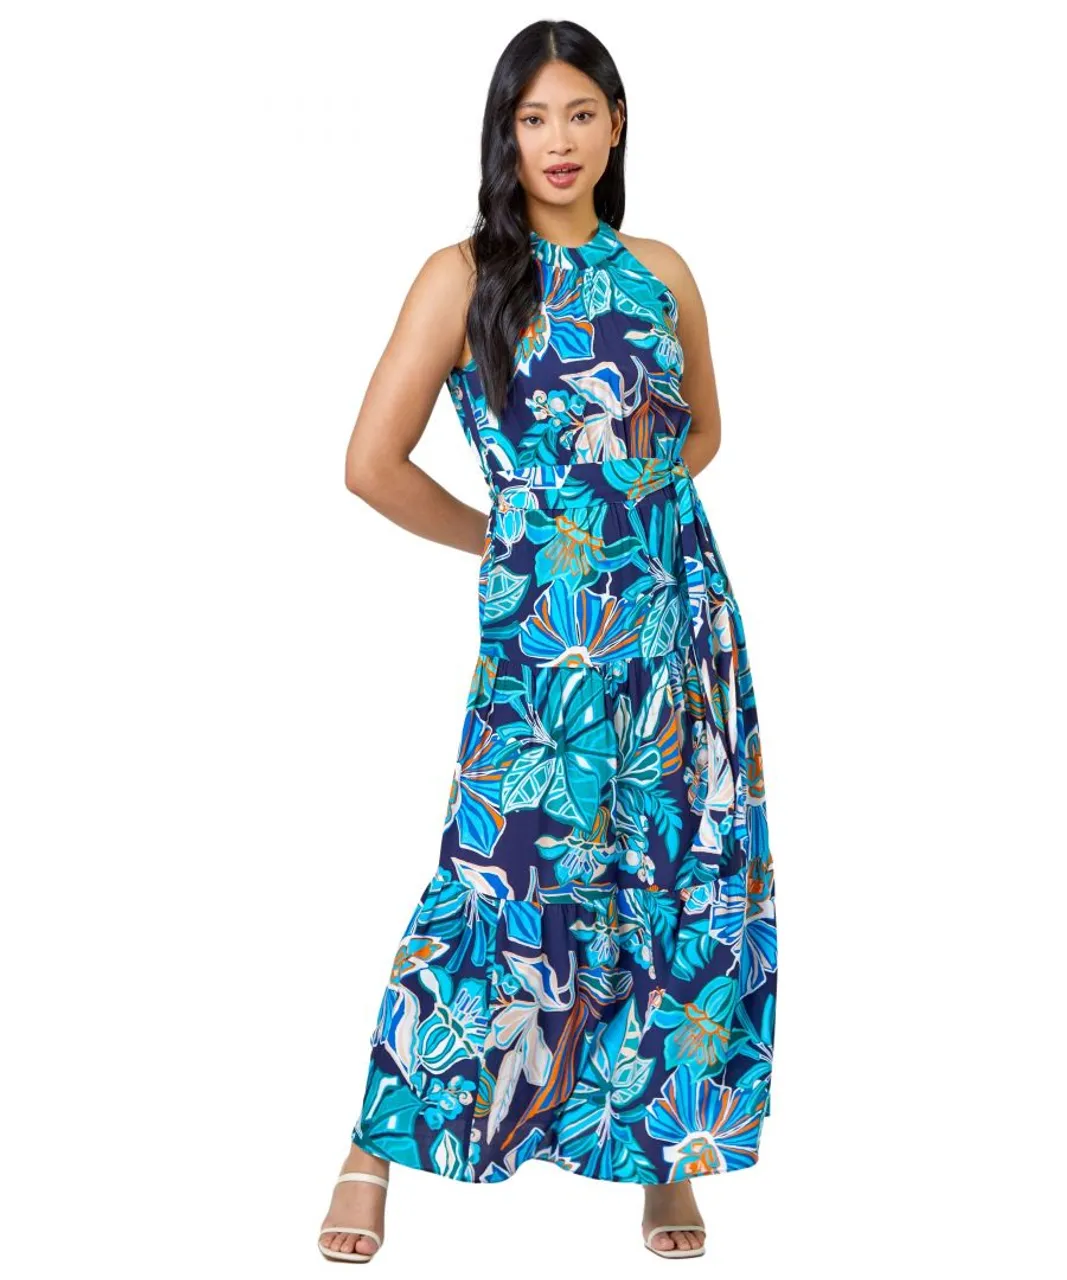 Roman Petite Womens Floral Print Tiered Dress - Blue